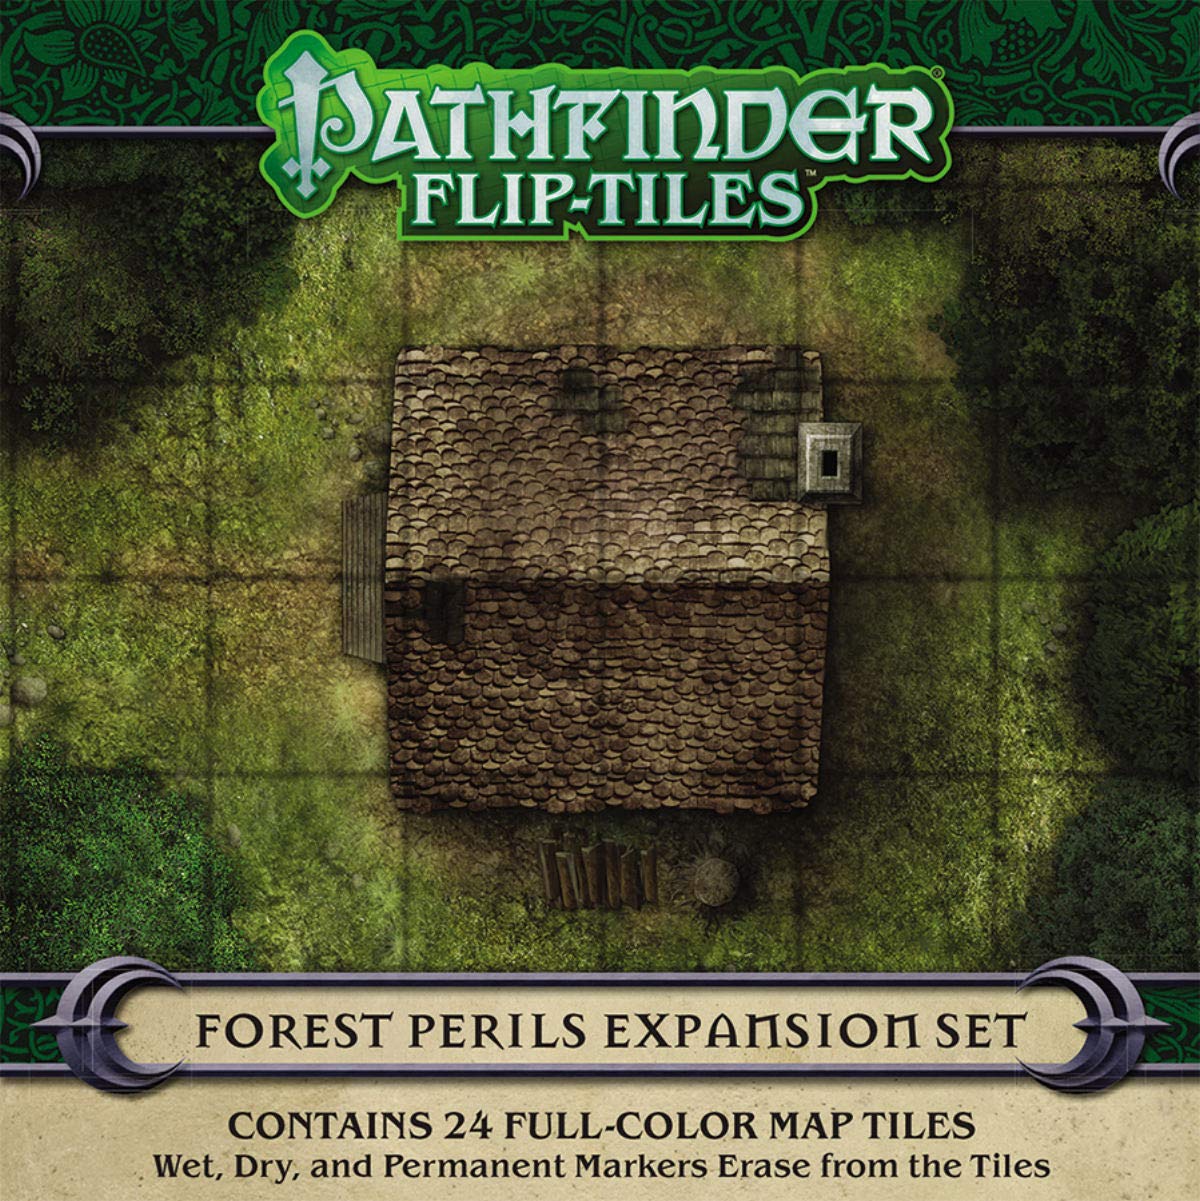 Pathfinder Flip-Tiles Forets Perils Expansion